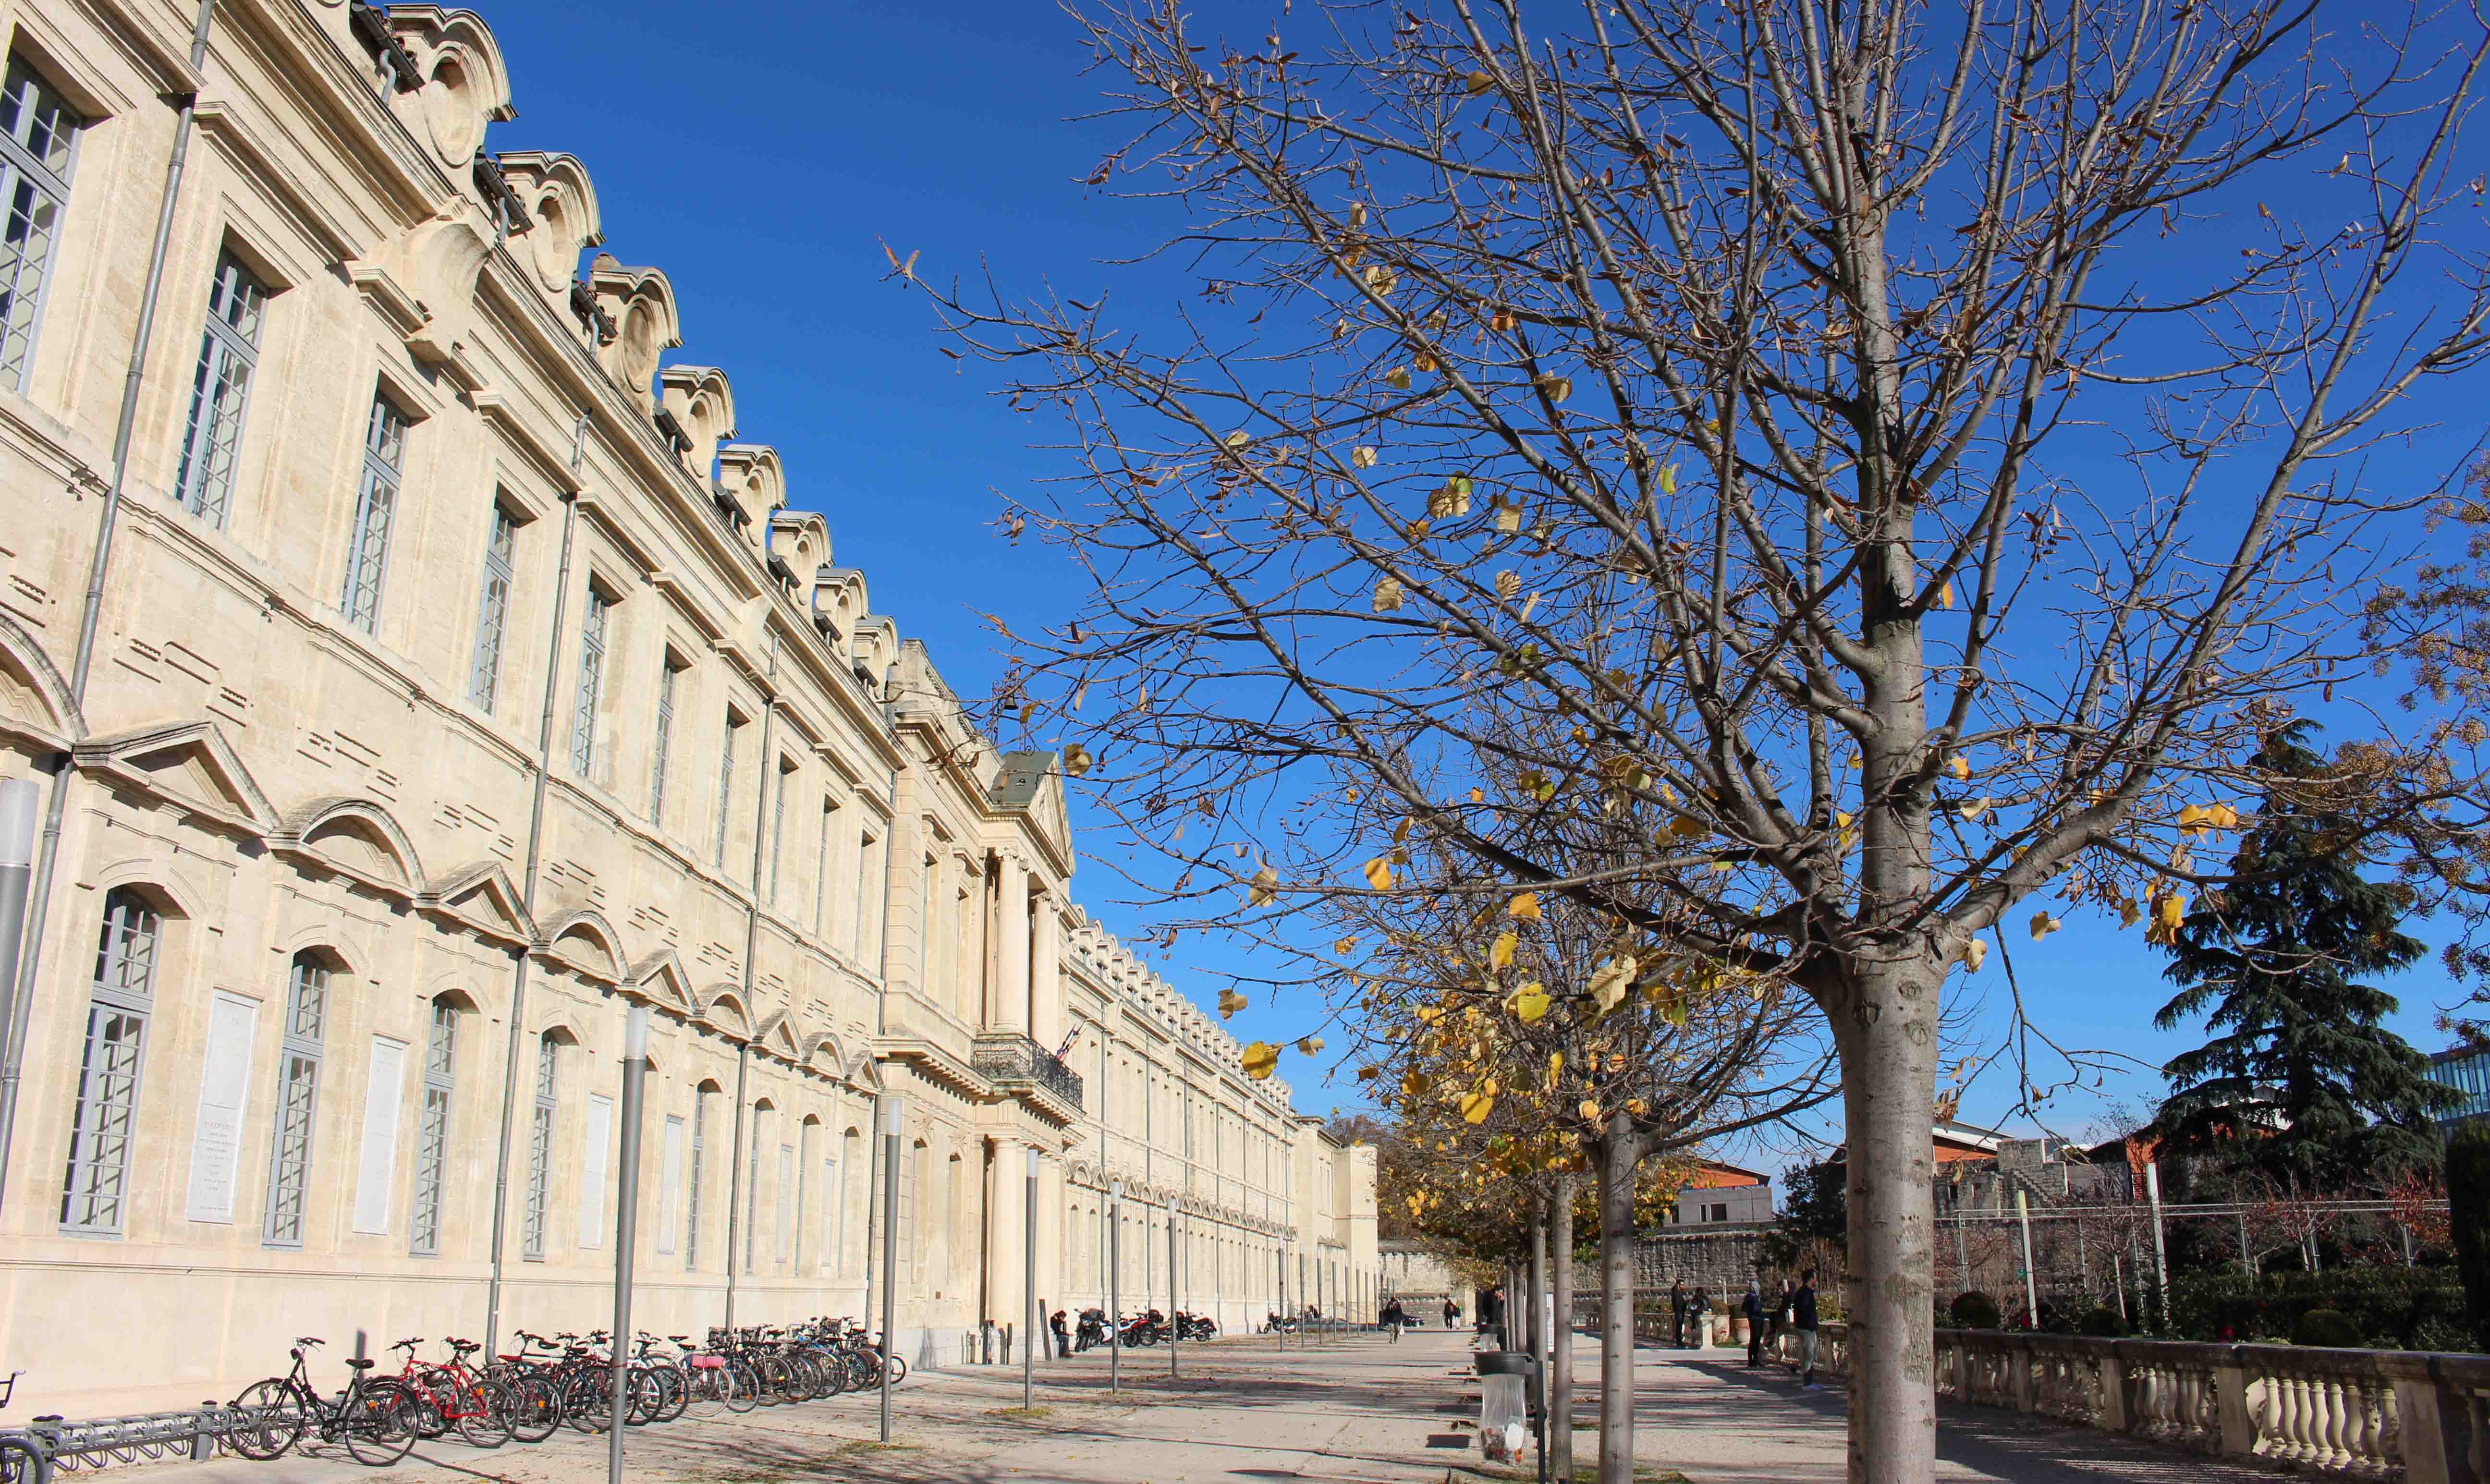 North building - Université Avignon - In pictures